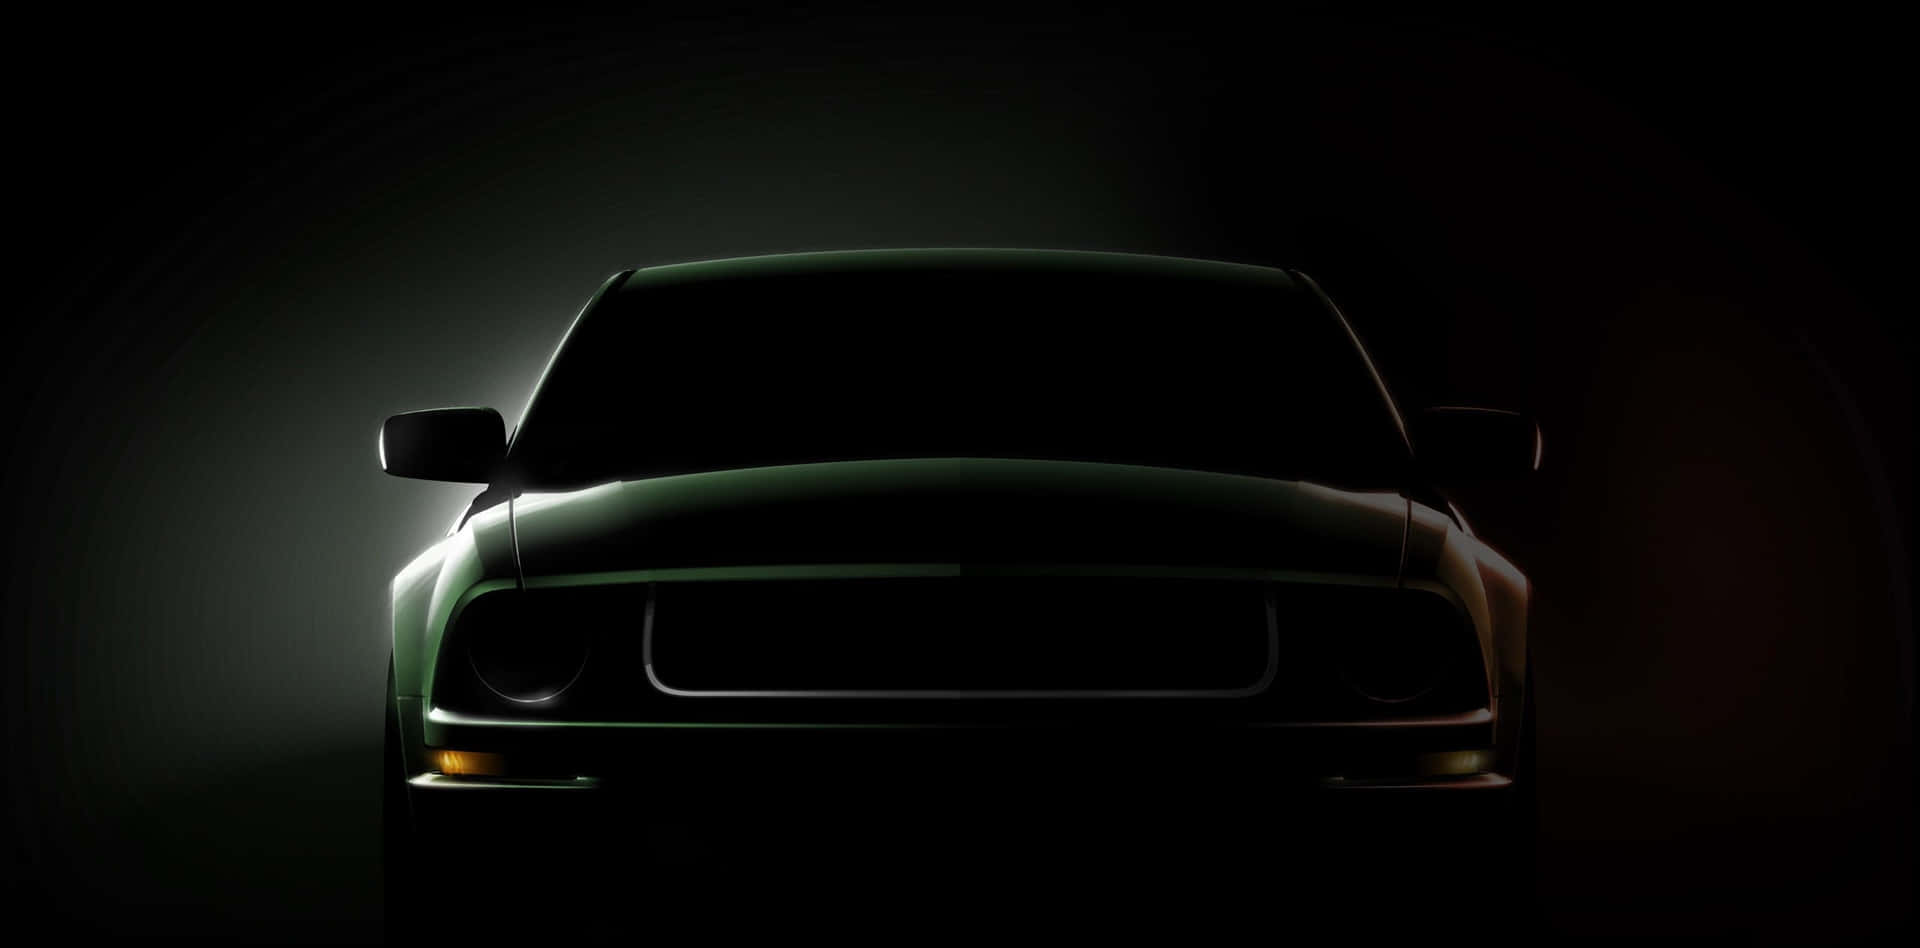 Iconic Ford Mustang Bullitt on the Open Road Wallpaper